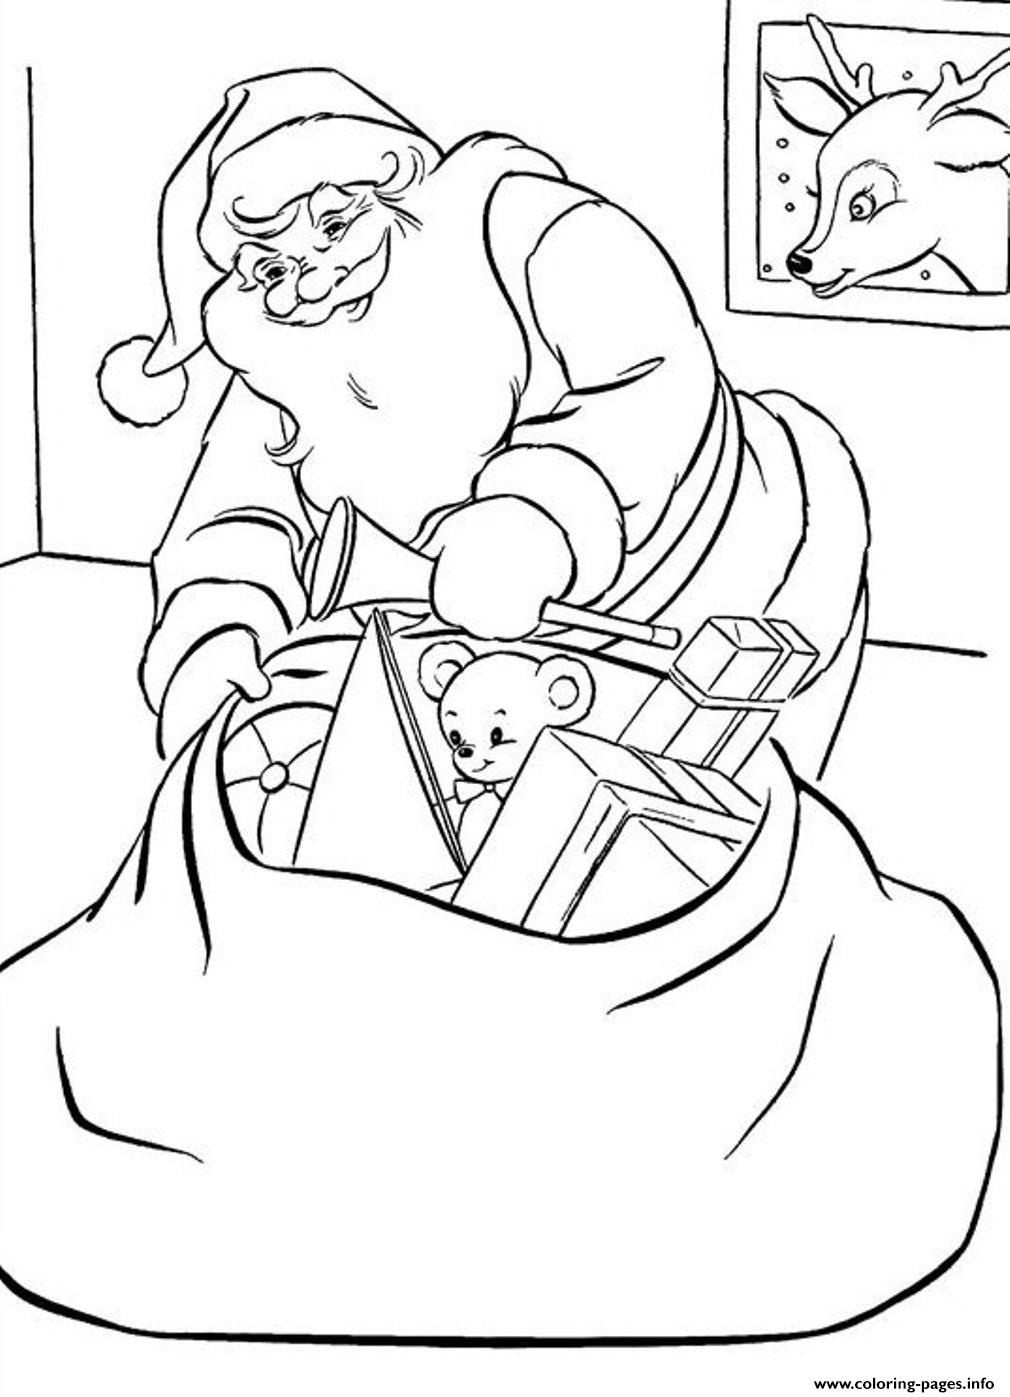 Santa Delivering Presents S For Kids Printable9a2c coloring